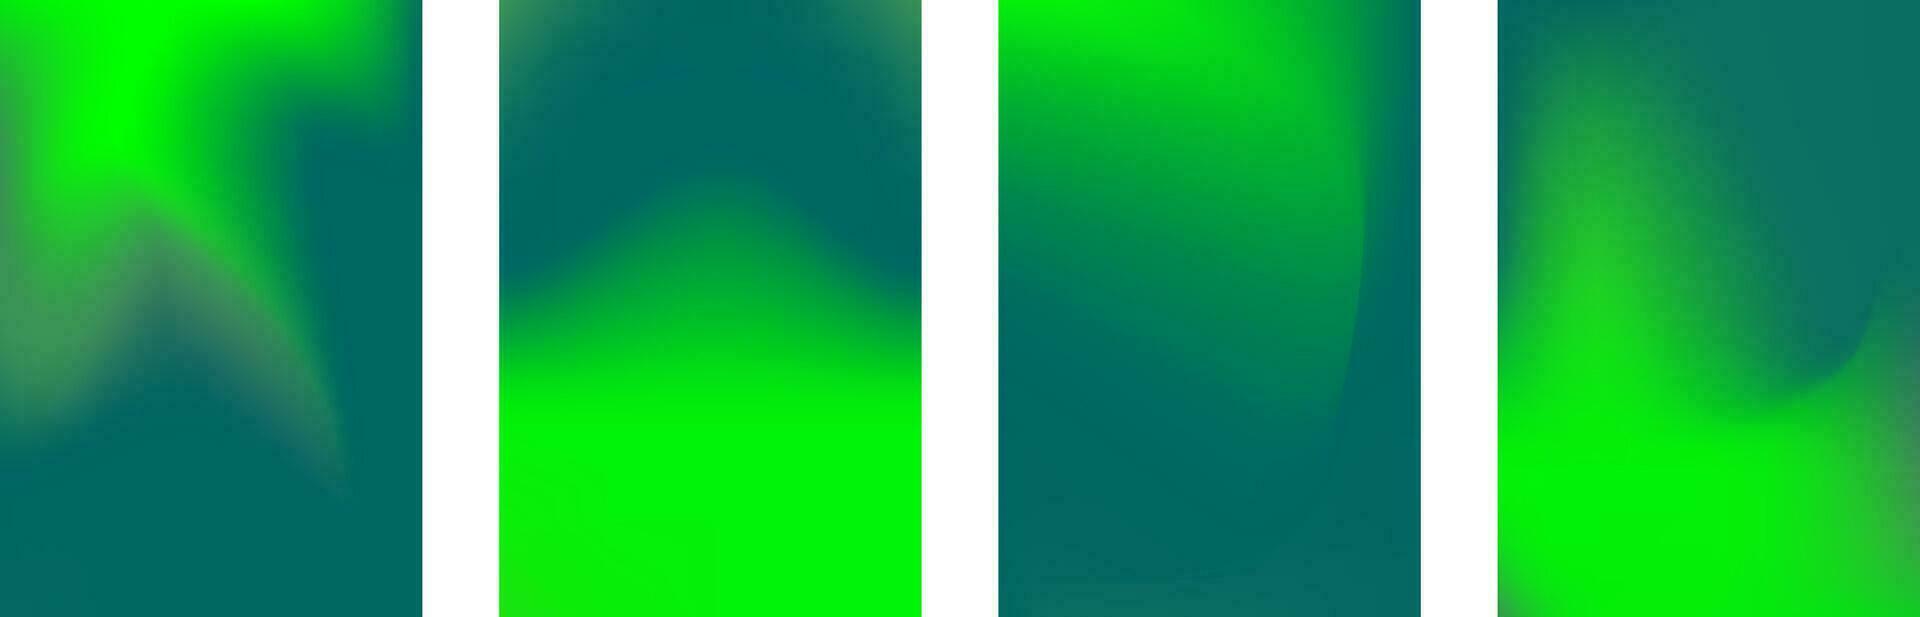 néon borrado onda.gradiente Projeto com verde, hortelã azul cores.vetor abstrato brilhante verde gradiente malha. vetor